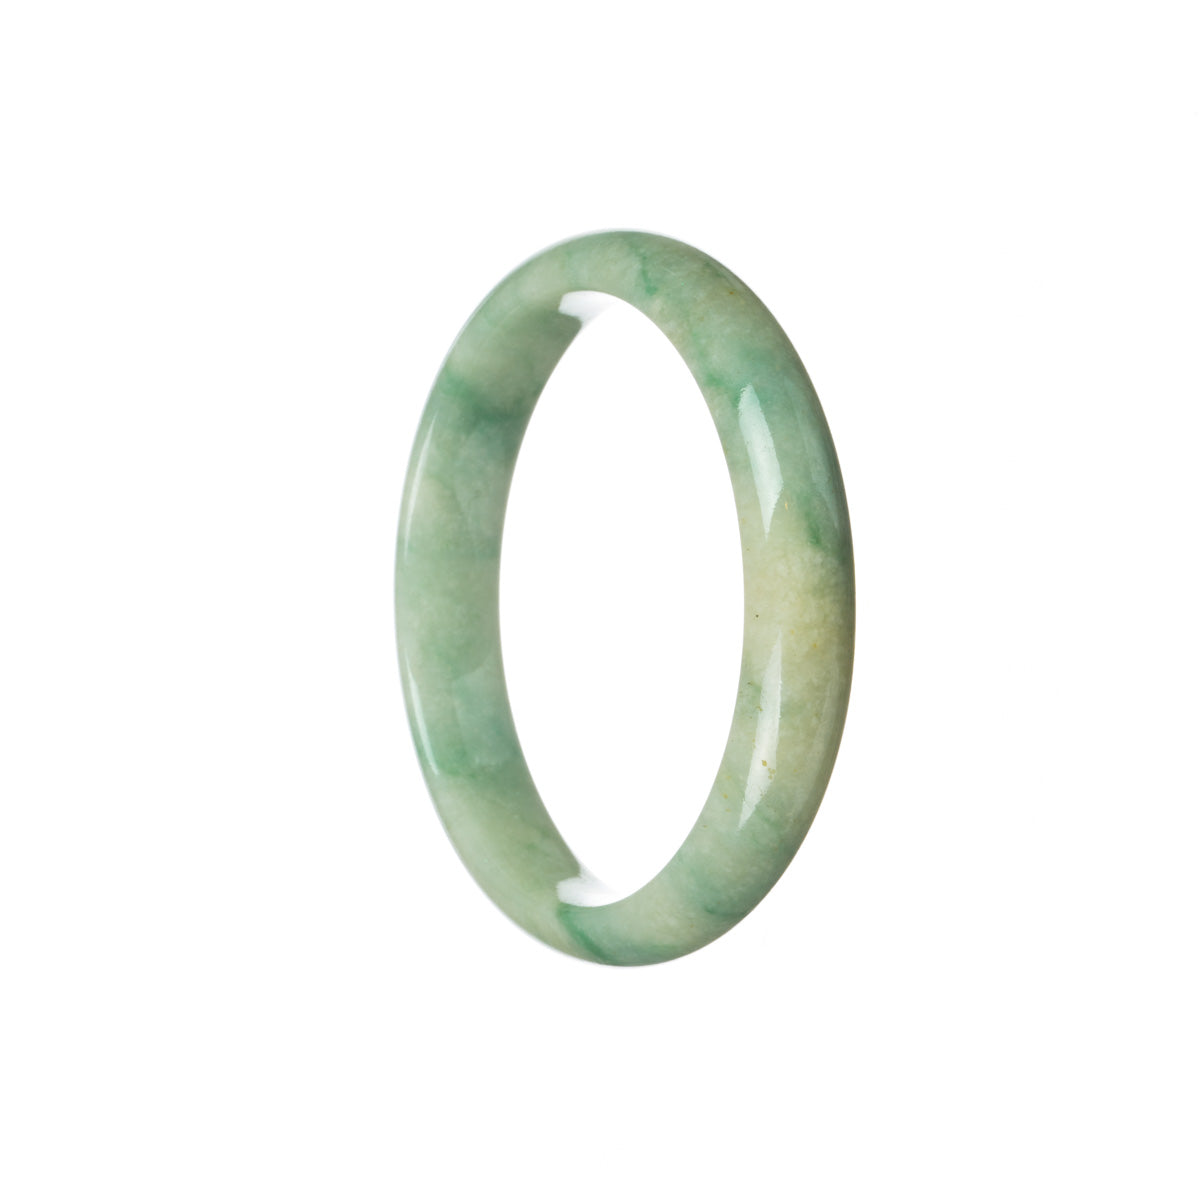 Real Type A Green on light green flower Jadeite Jade Bangle Bracelet - 57mm Half Moon